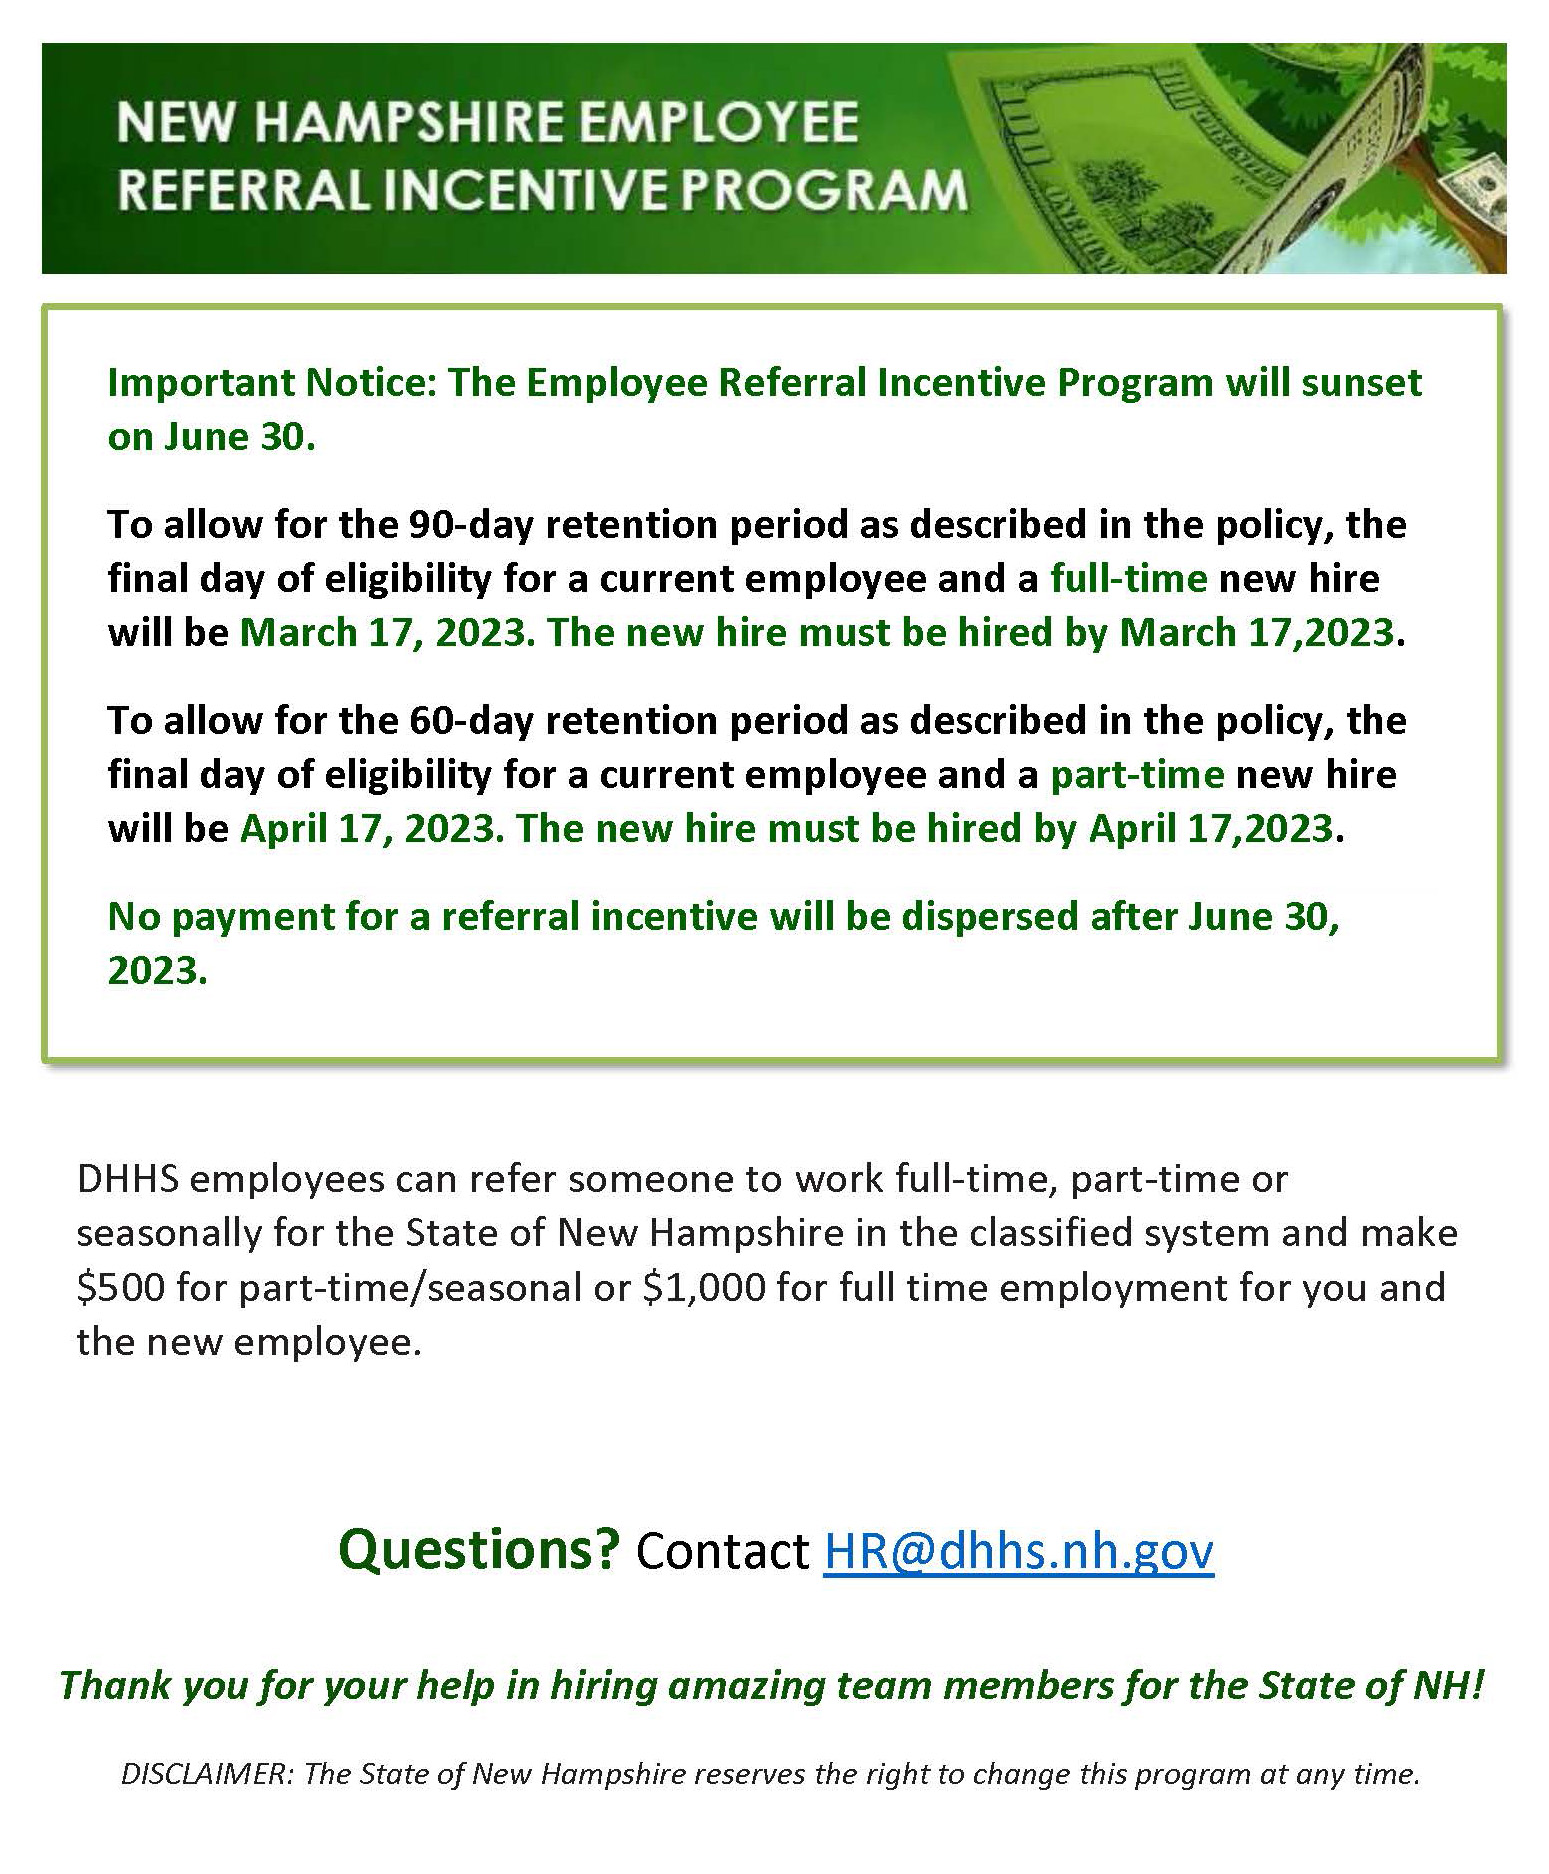 Referral Incentive Program flyer